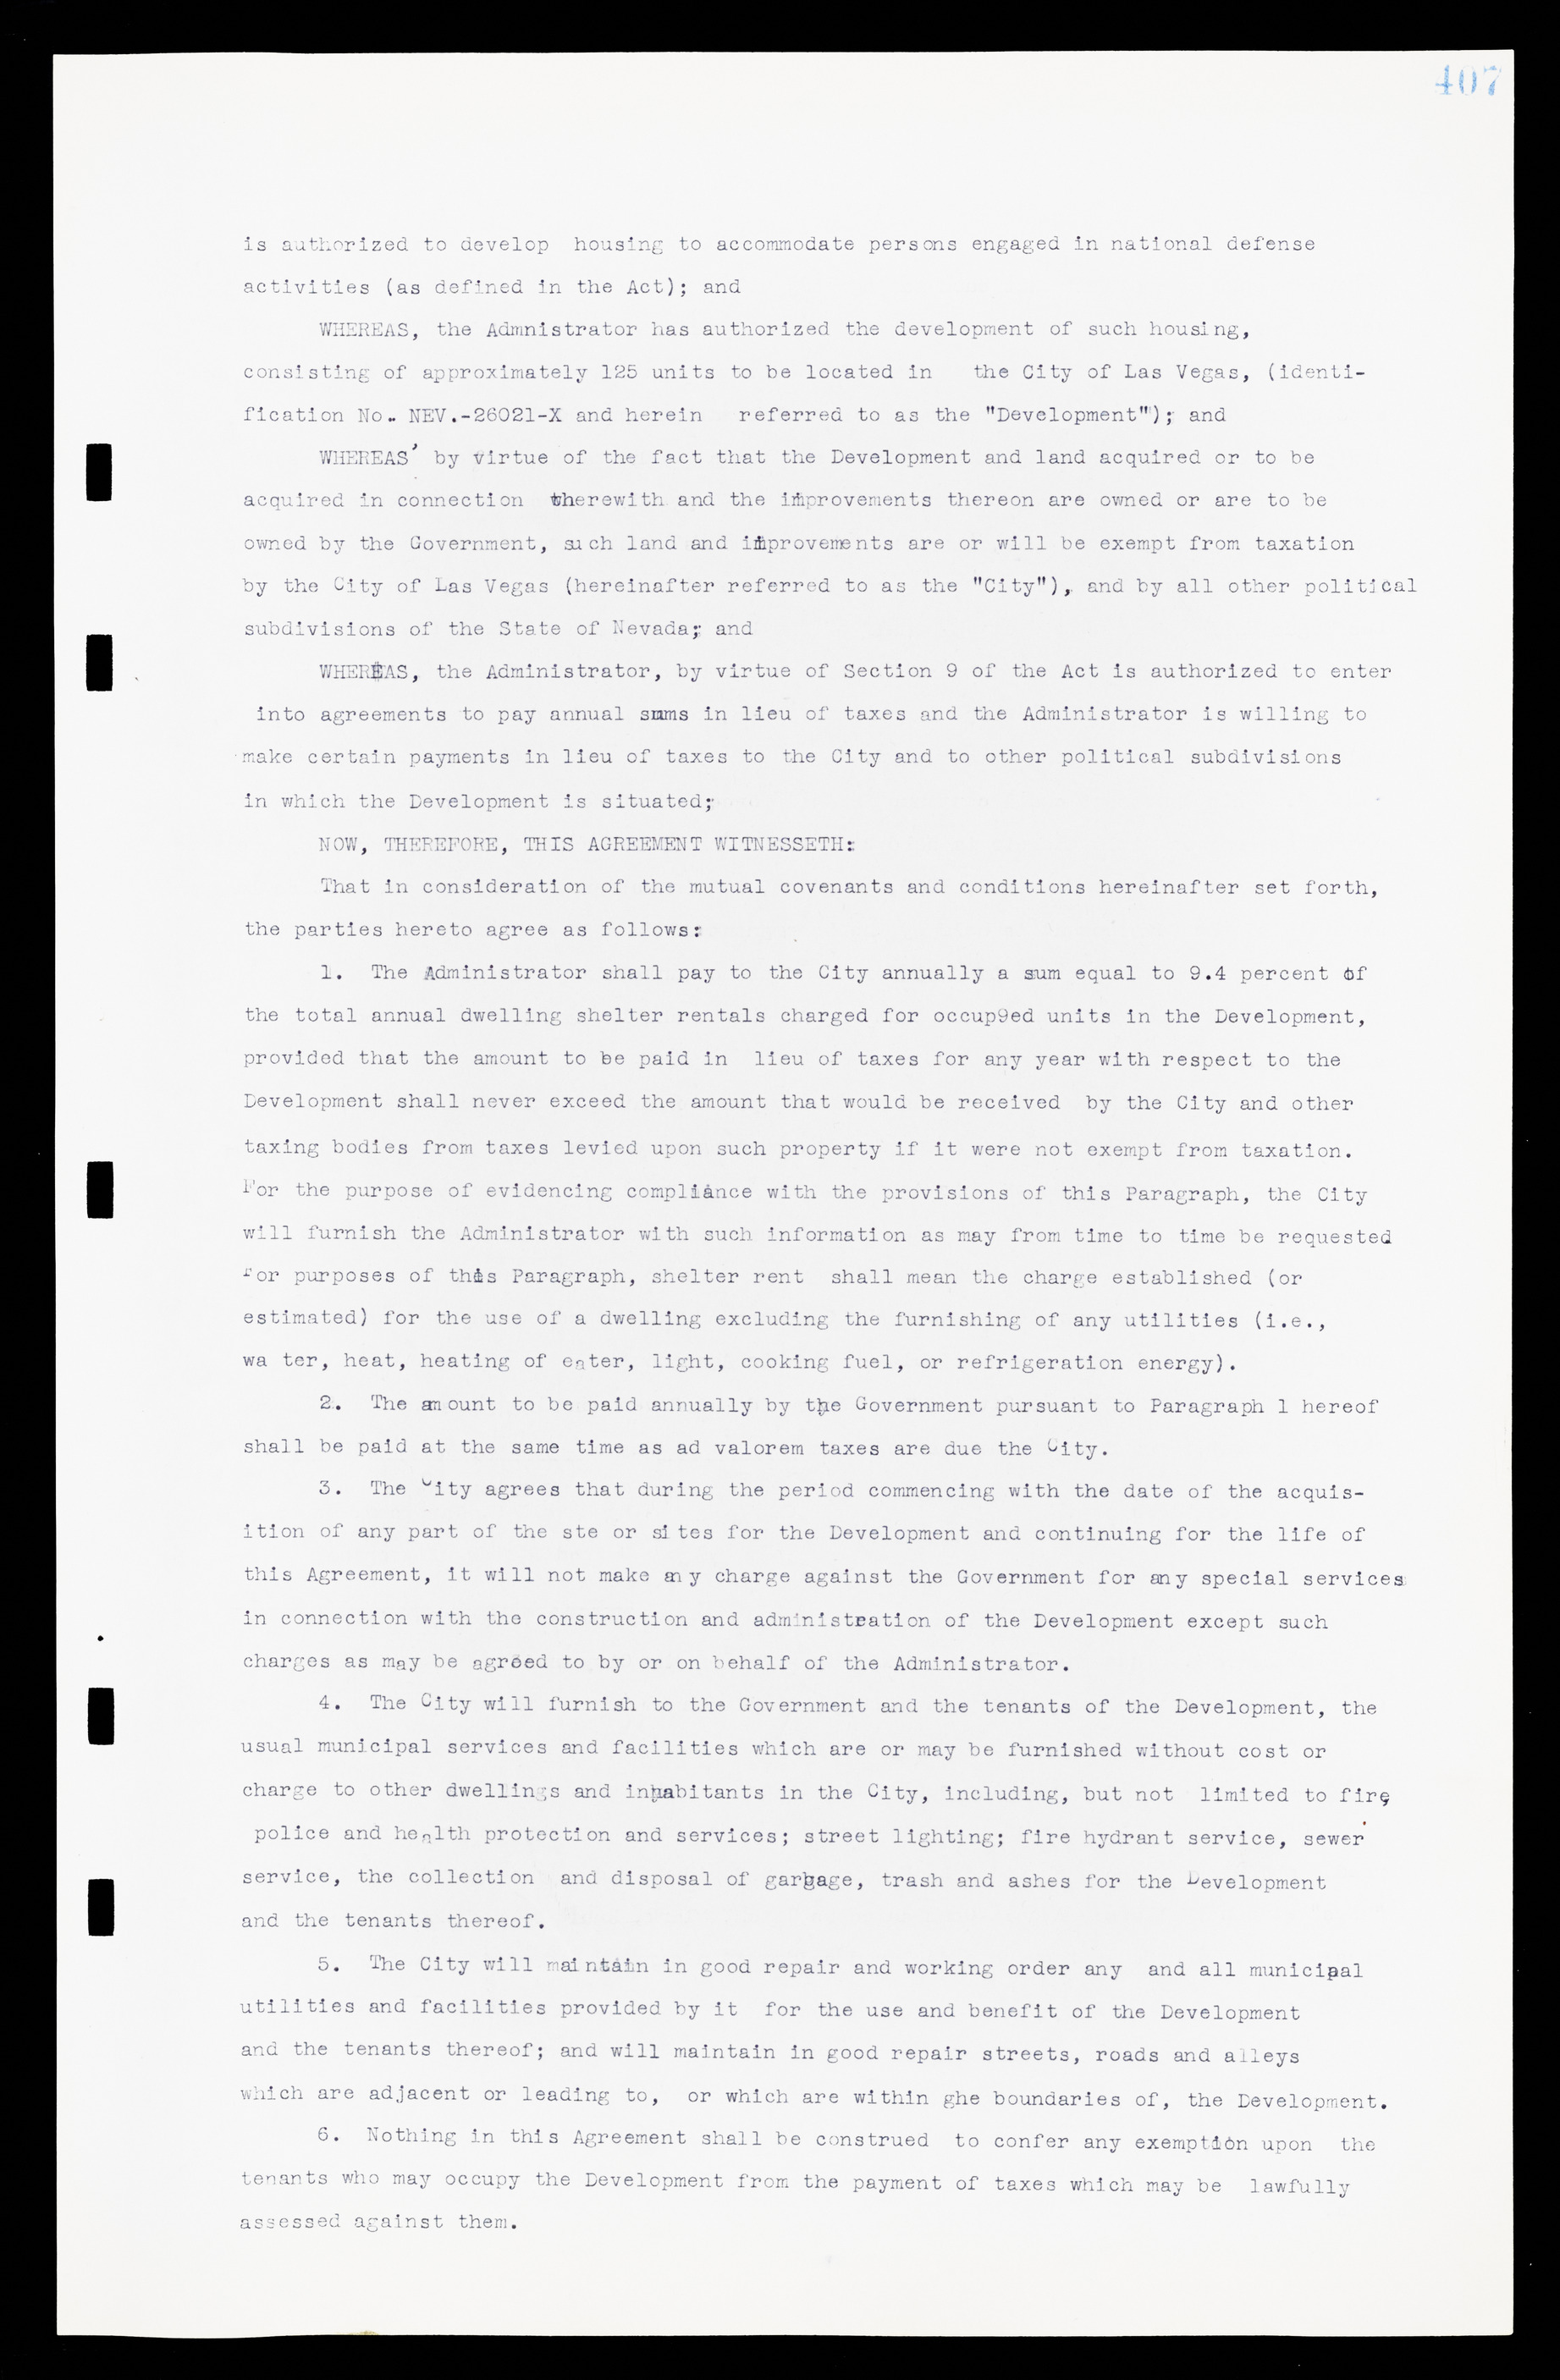 Las Vegas City Commission Minutes, February 17, 1937 to August 4, 1942, lvc000004-433